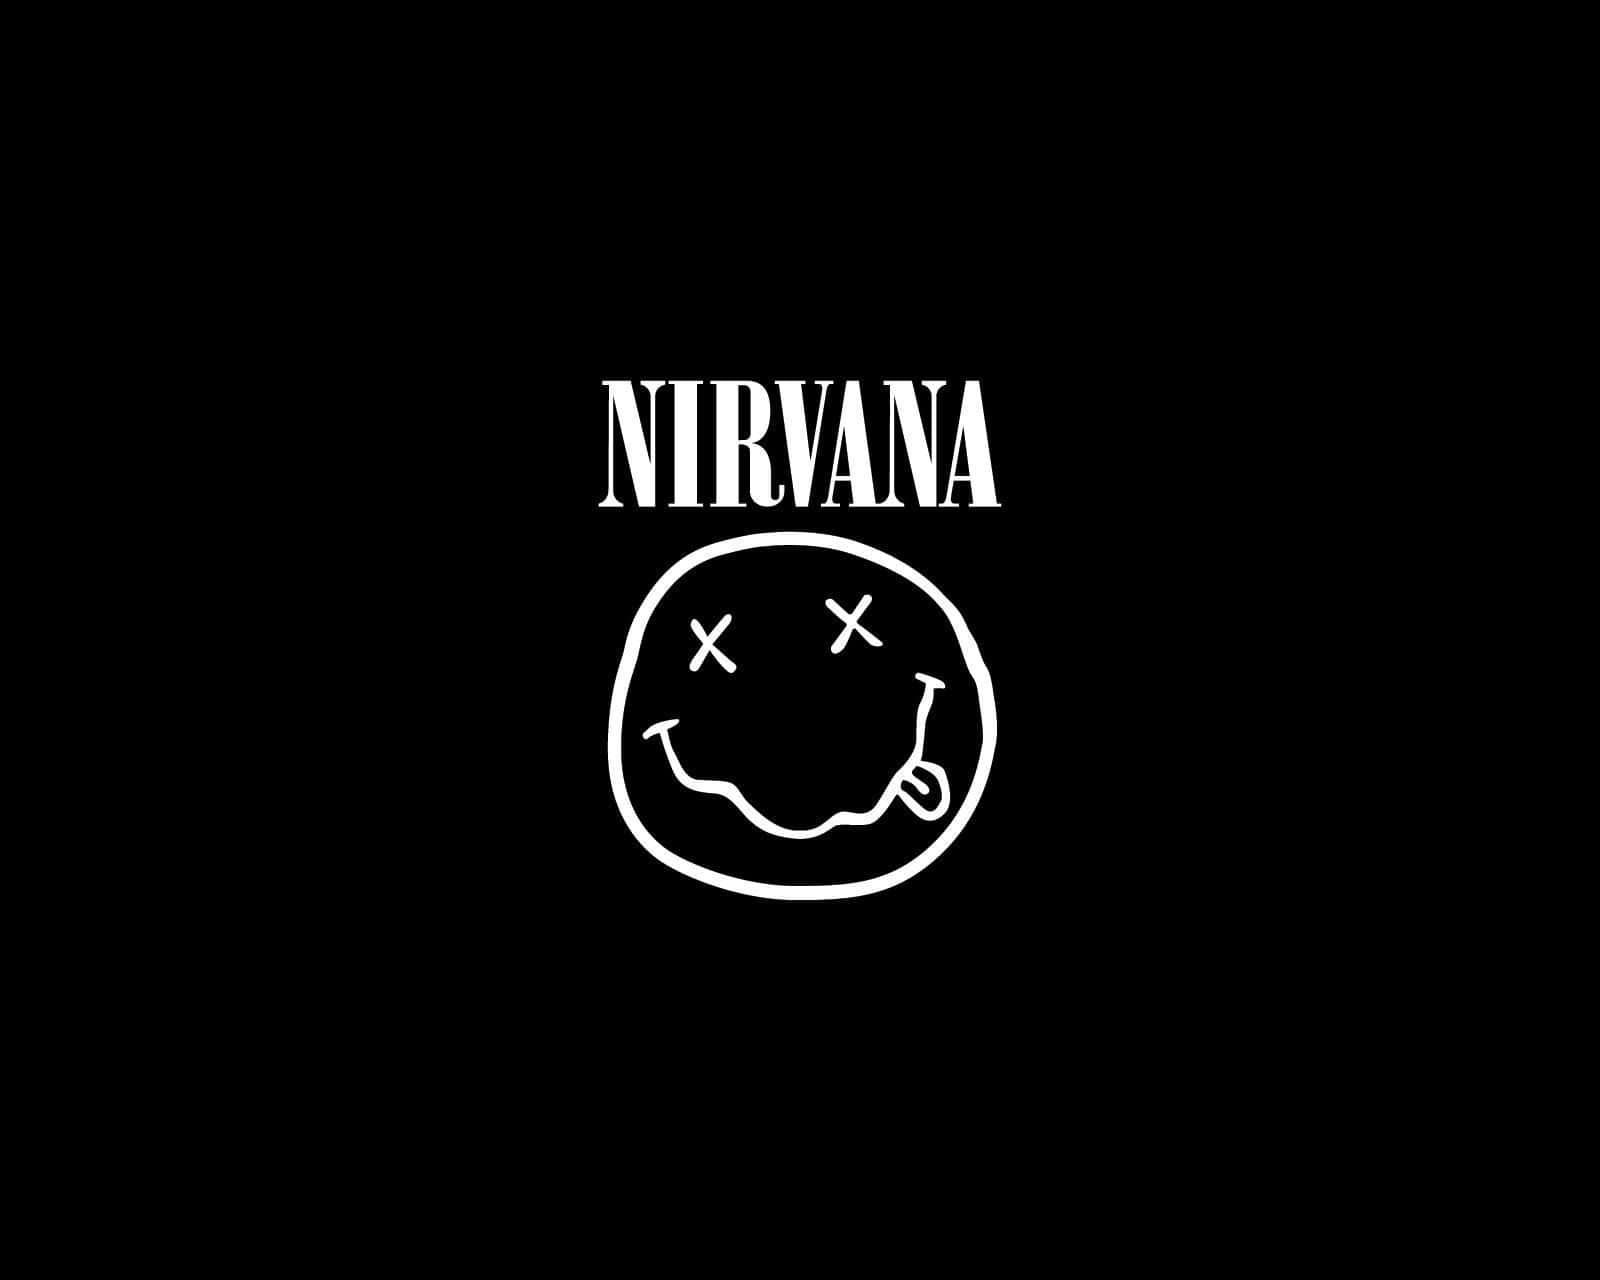 Iconicologo Del Viso Sorridente Della Band Nirvana